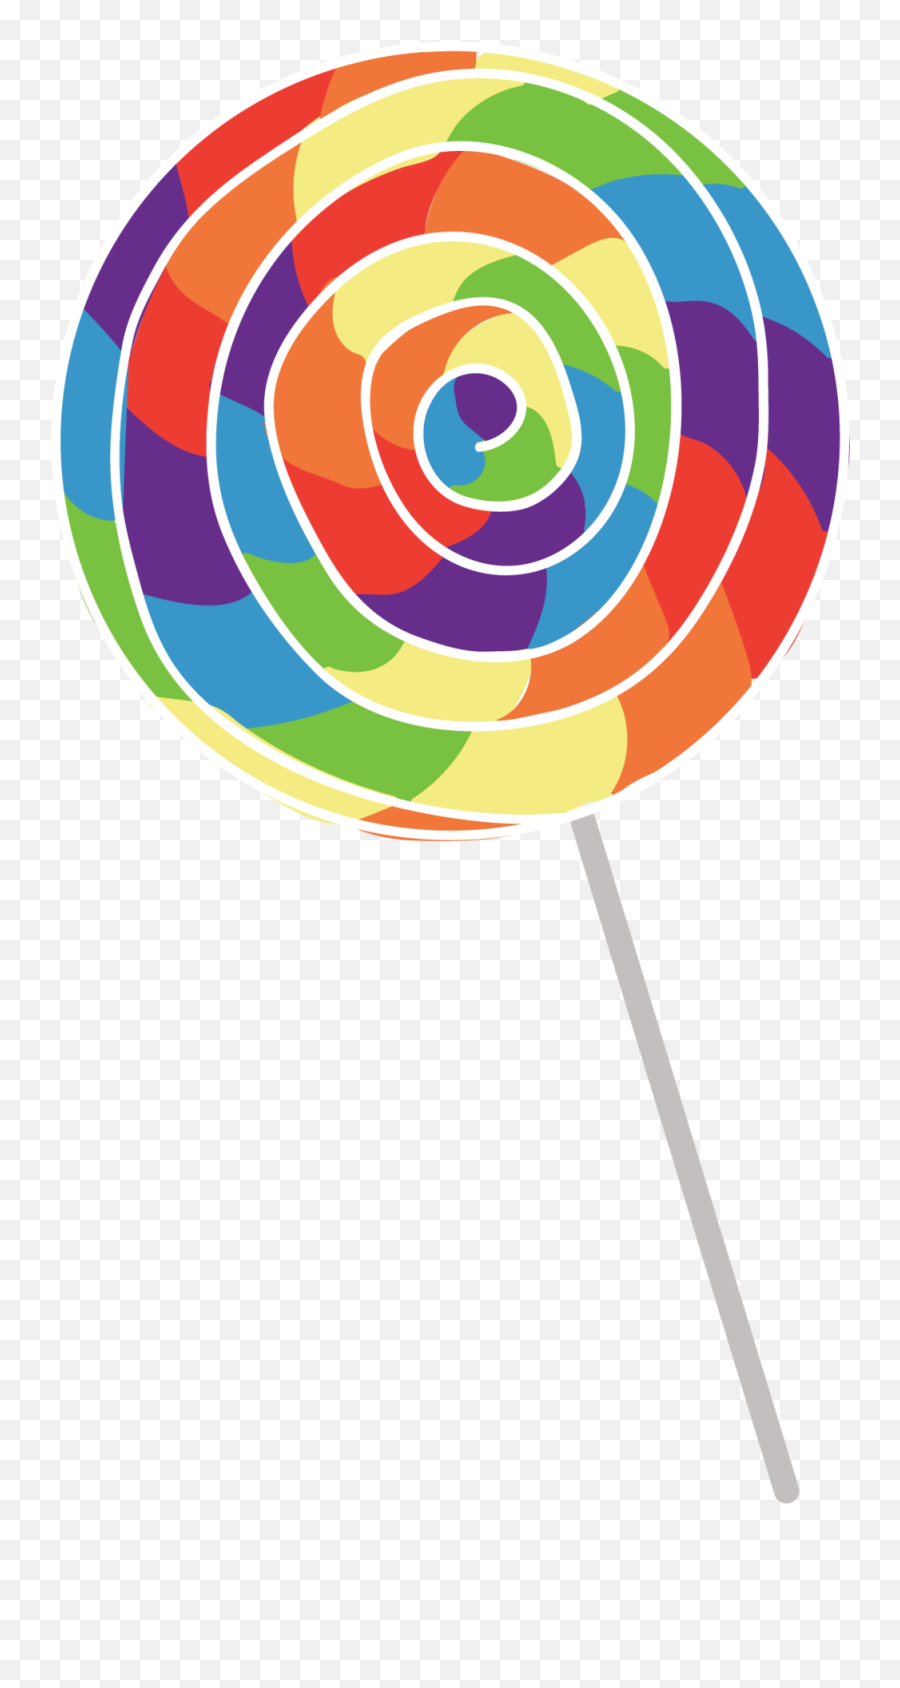 Download Rainbow Lollildpi - Circle Png Image With No Rainbow Lollipop Clipart,Rainbow Circle Png